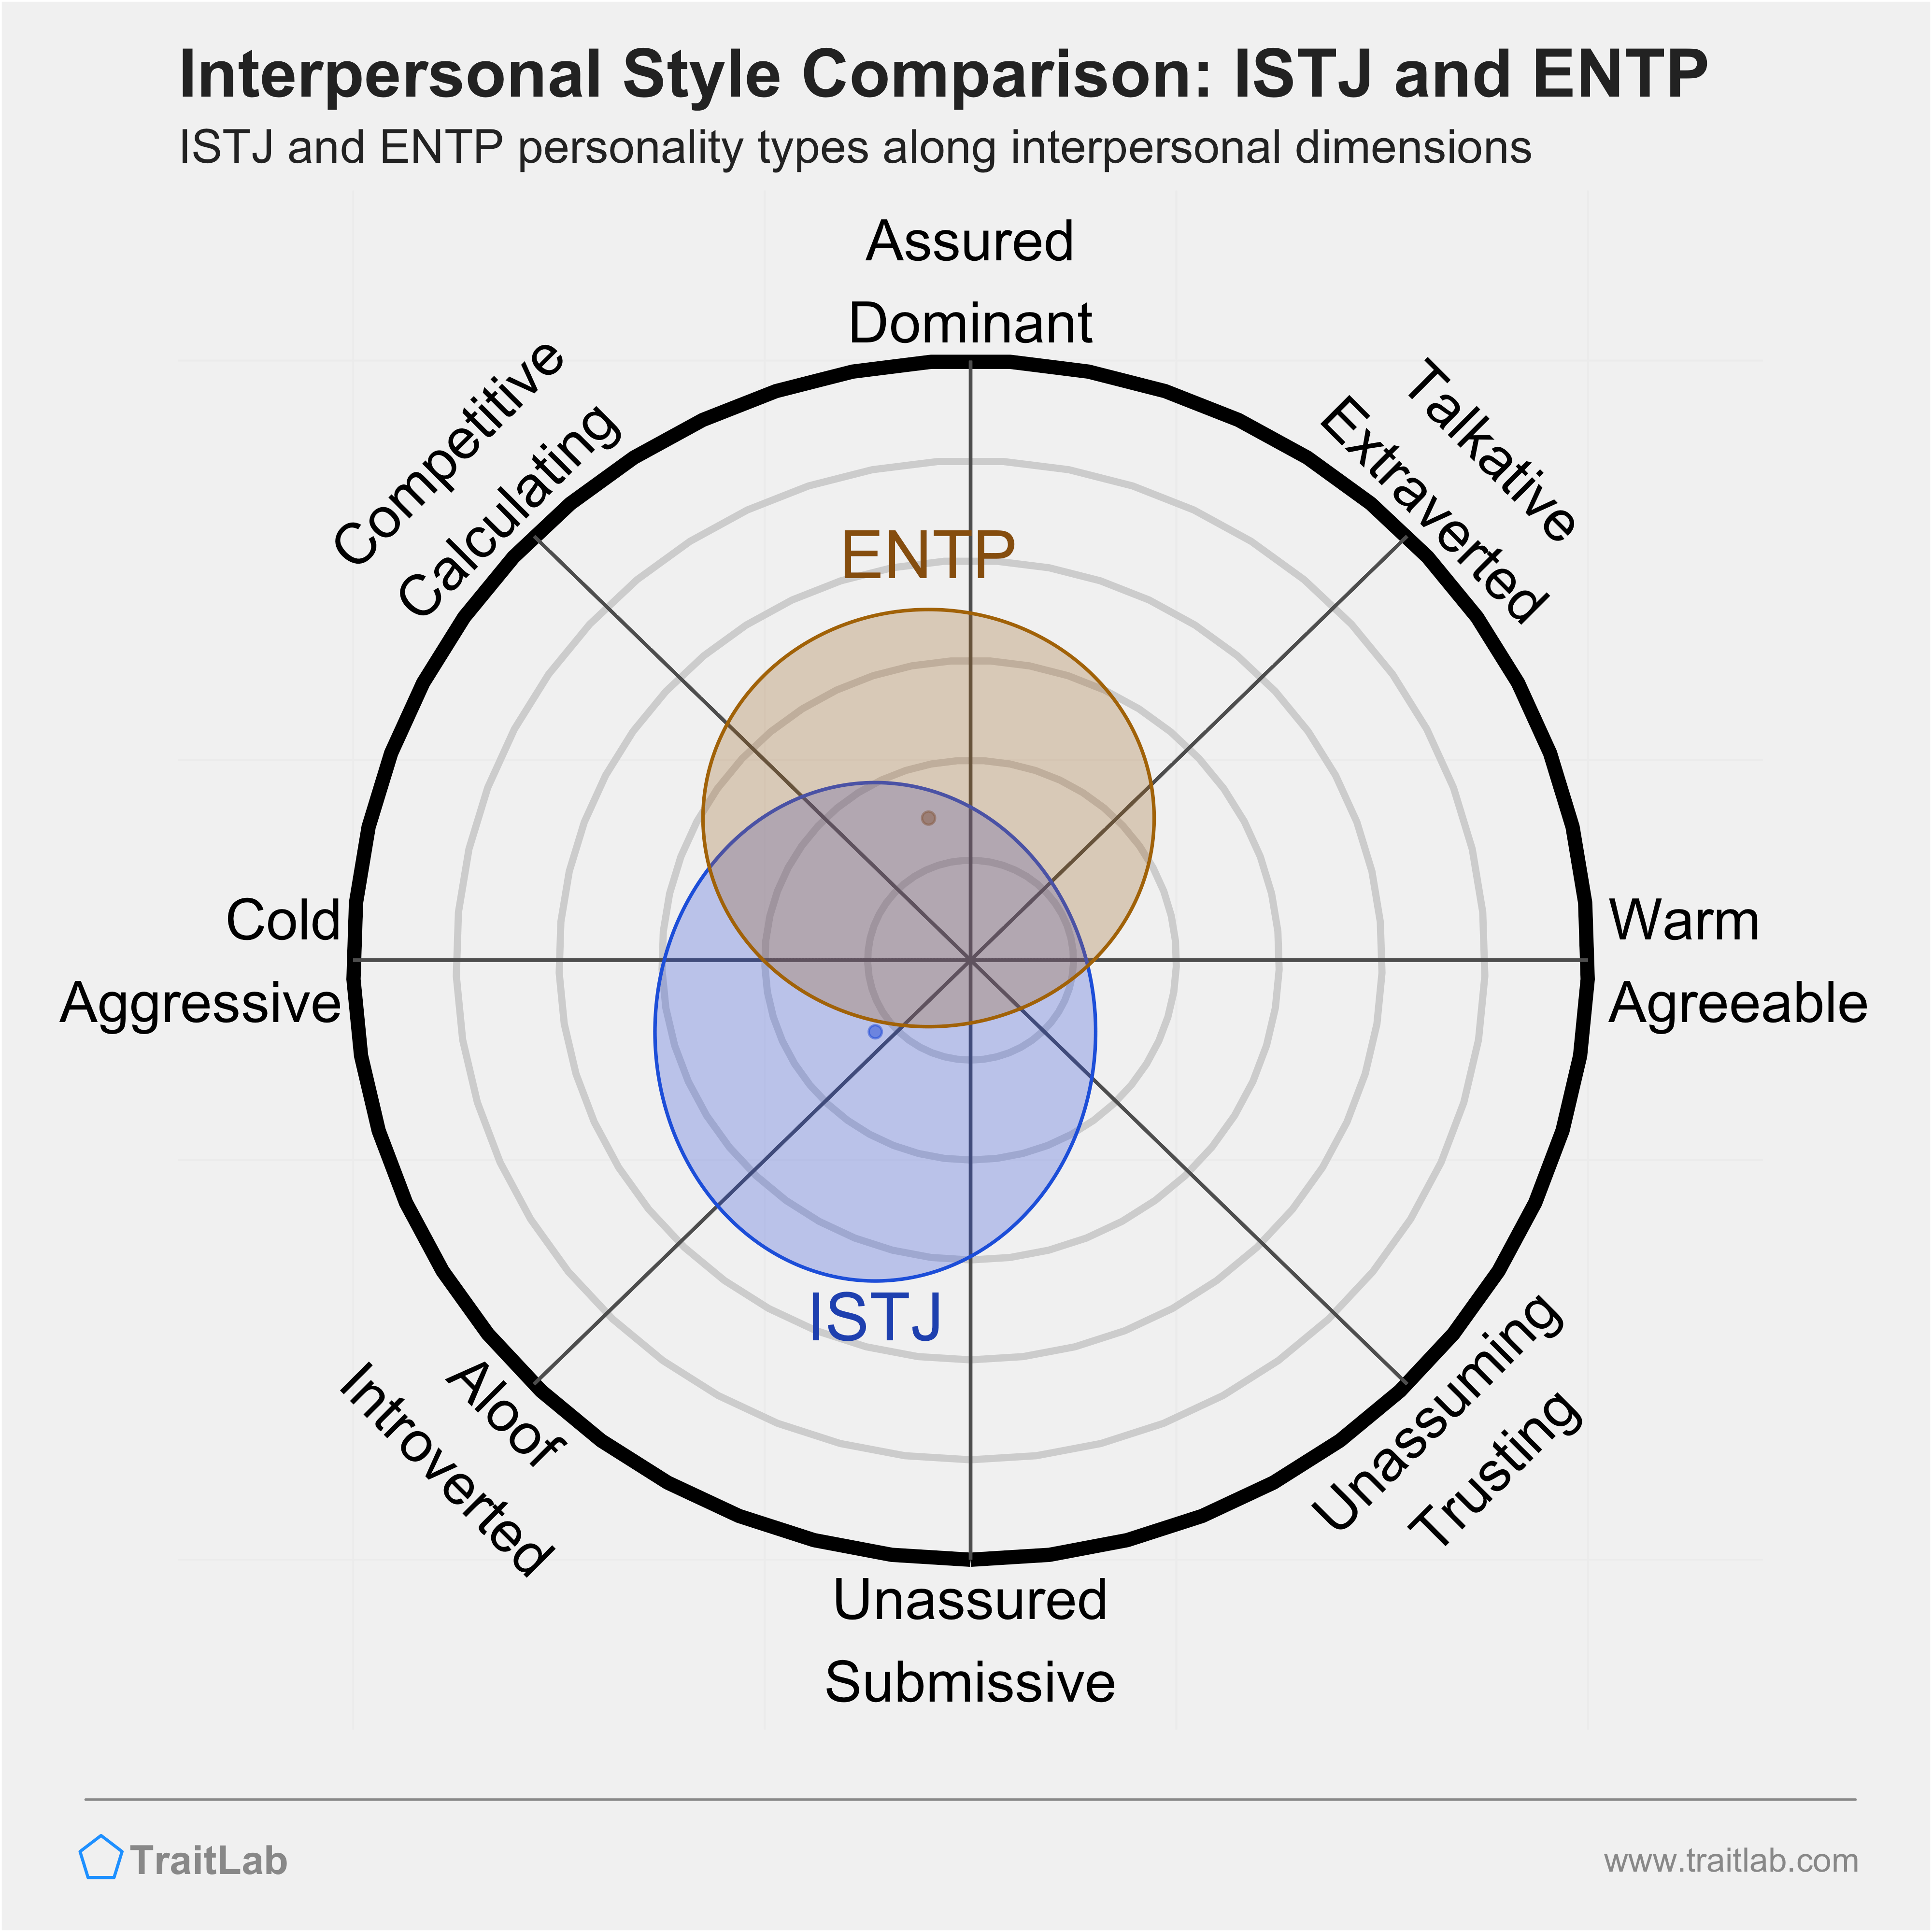 ISTJ and ENTP comparison across interpersonal dimensions